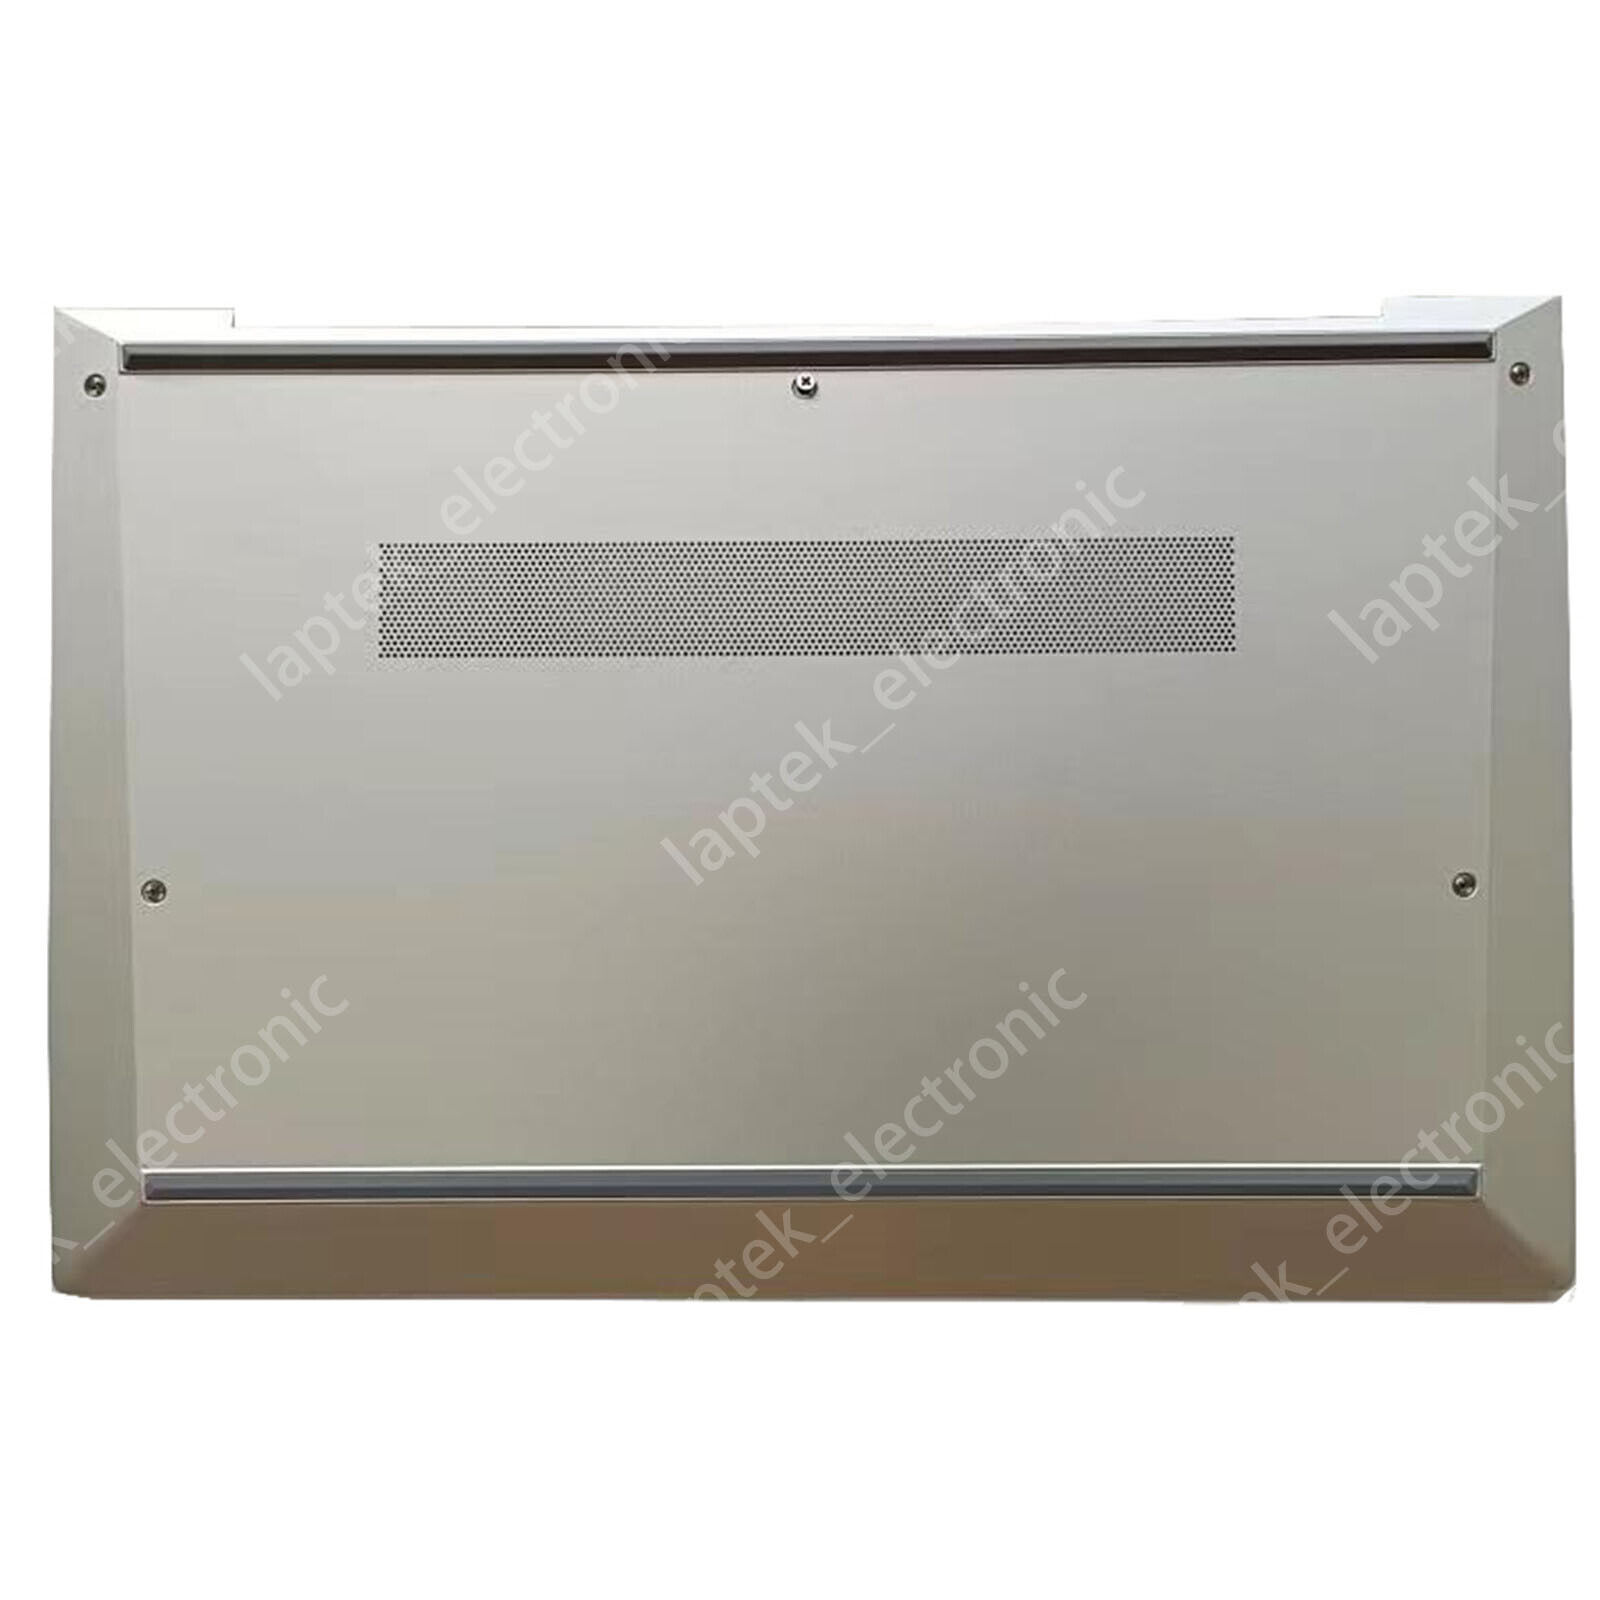 New For HP EliteBook 840 G7 G8 745 Bottom Cover Lower Case M36309-001 Silver